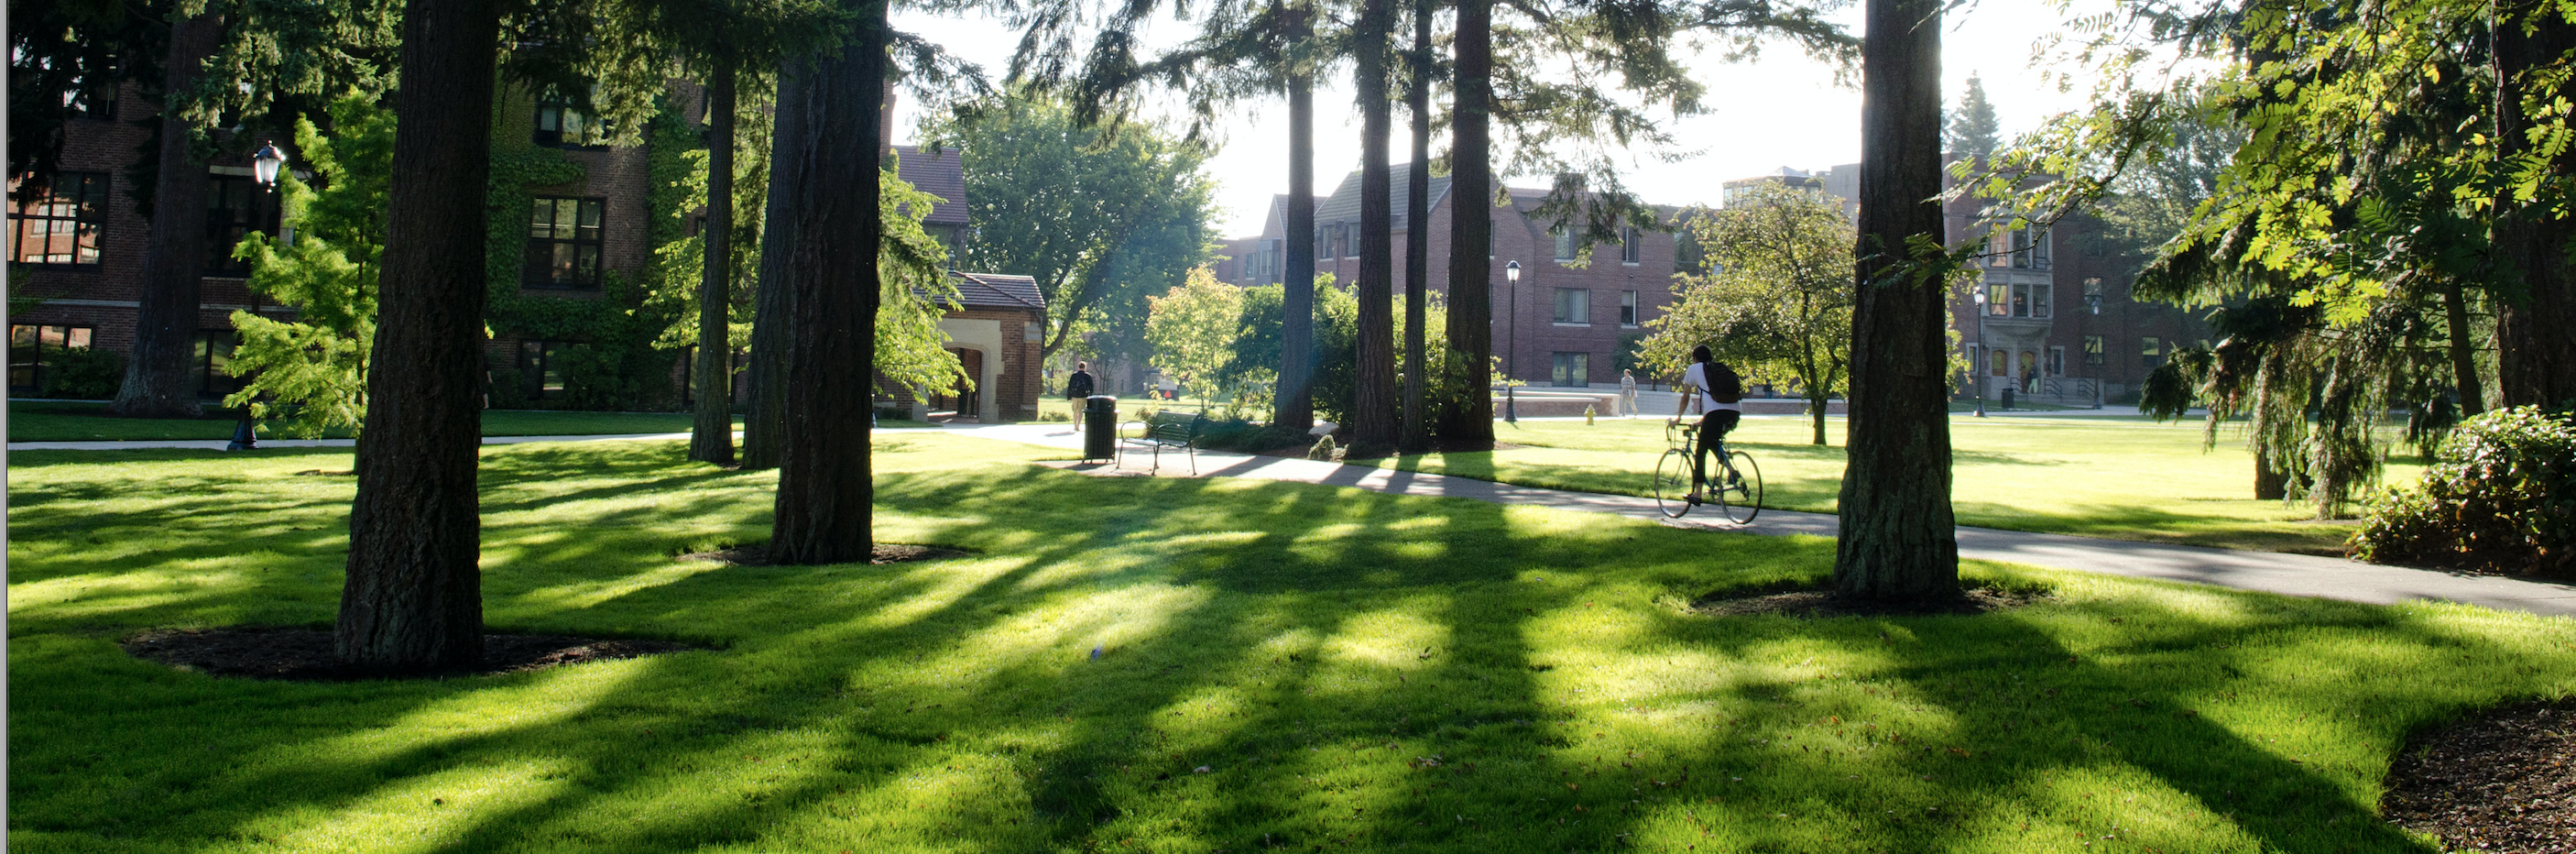 People walking among campus trees